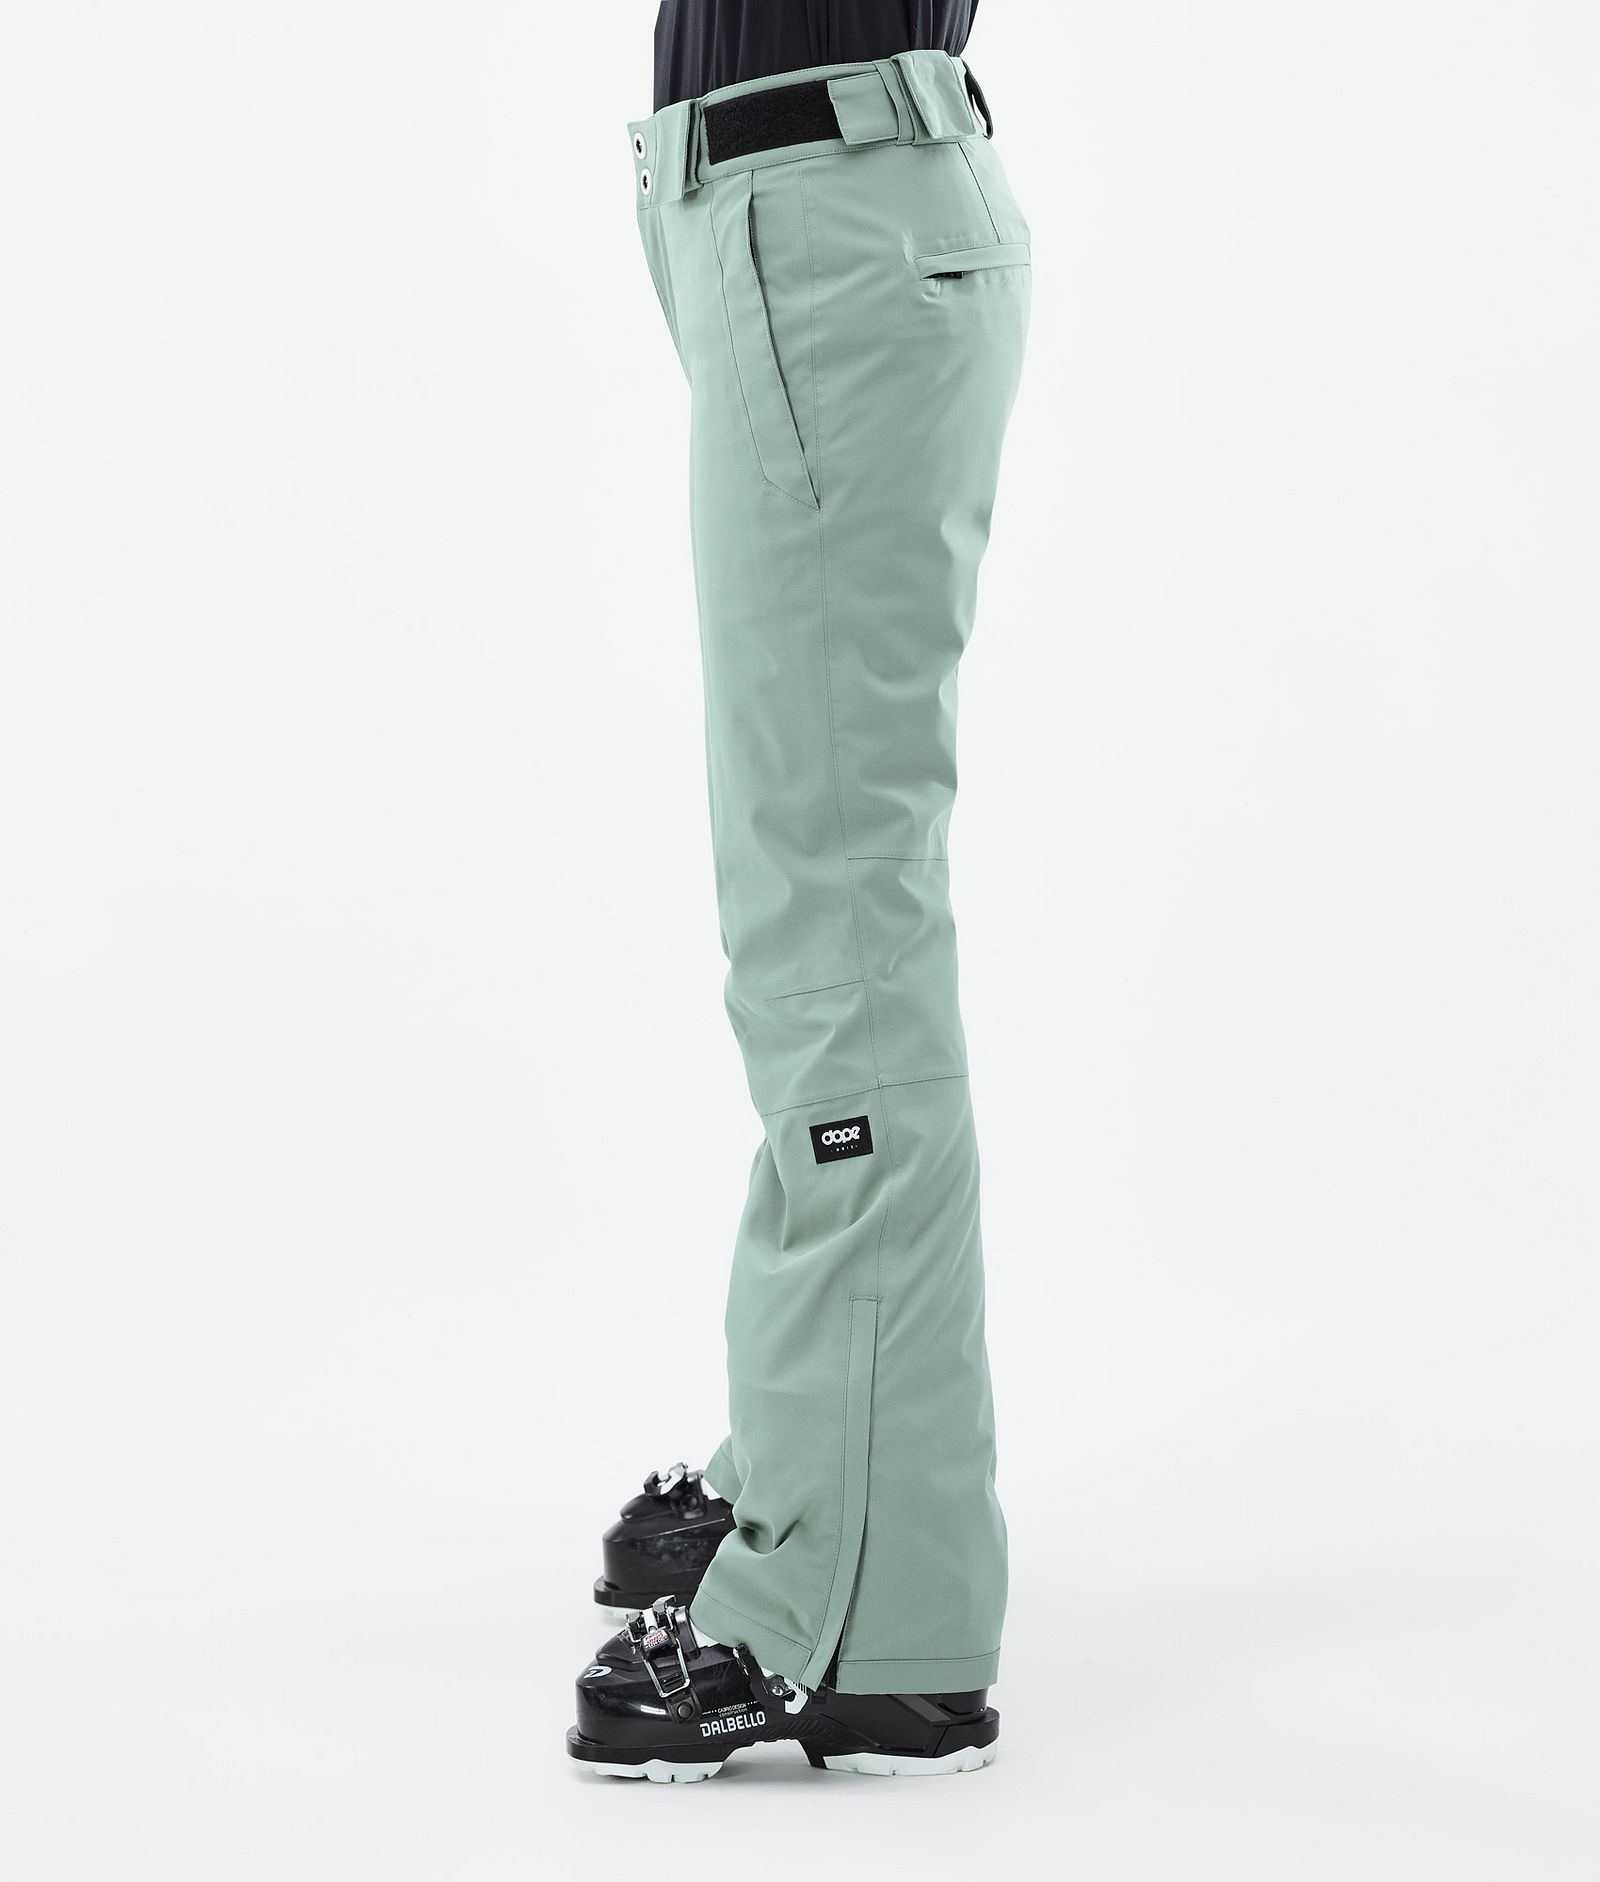 Con W 2022 Pantalon de Ski Femme Faded Green, Image 2 sur 5